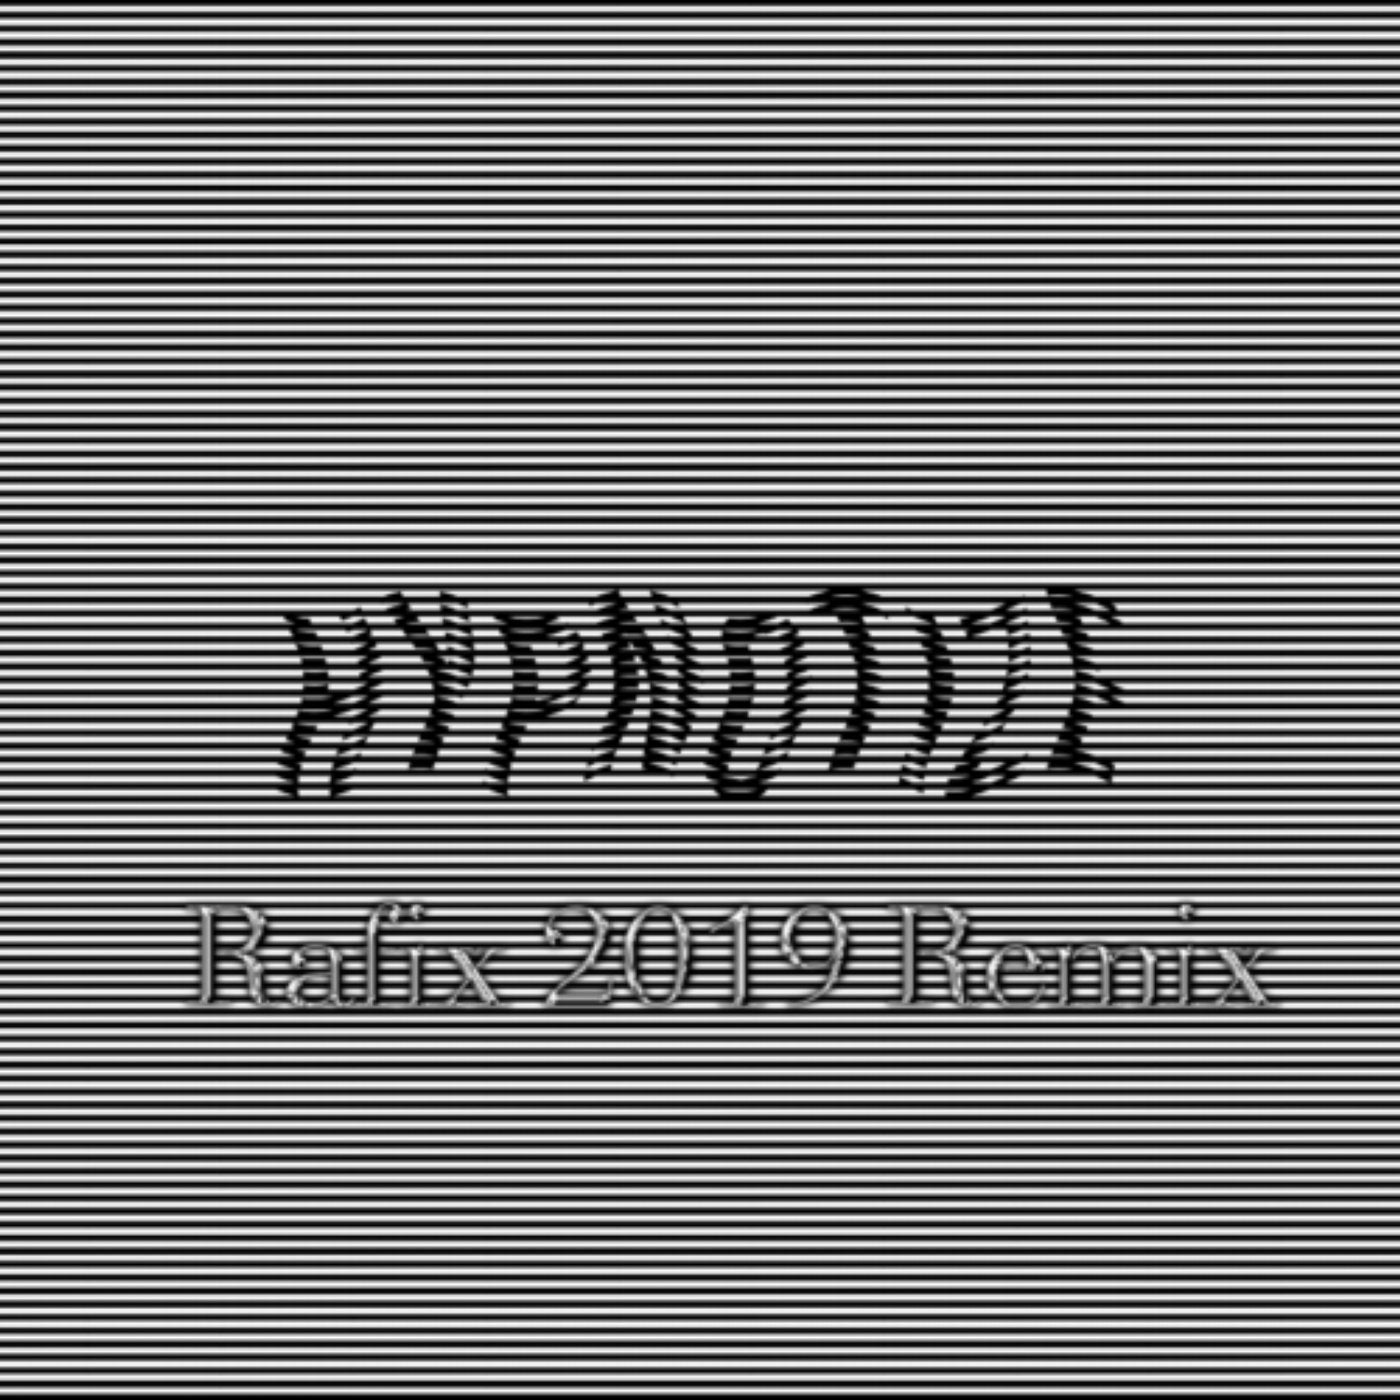 Hypnotize (Rafix 2019 Remix)